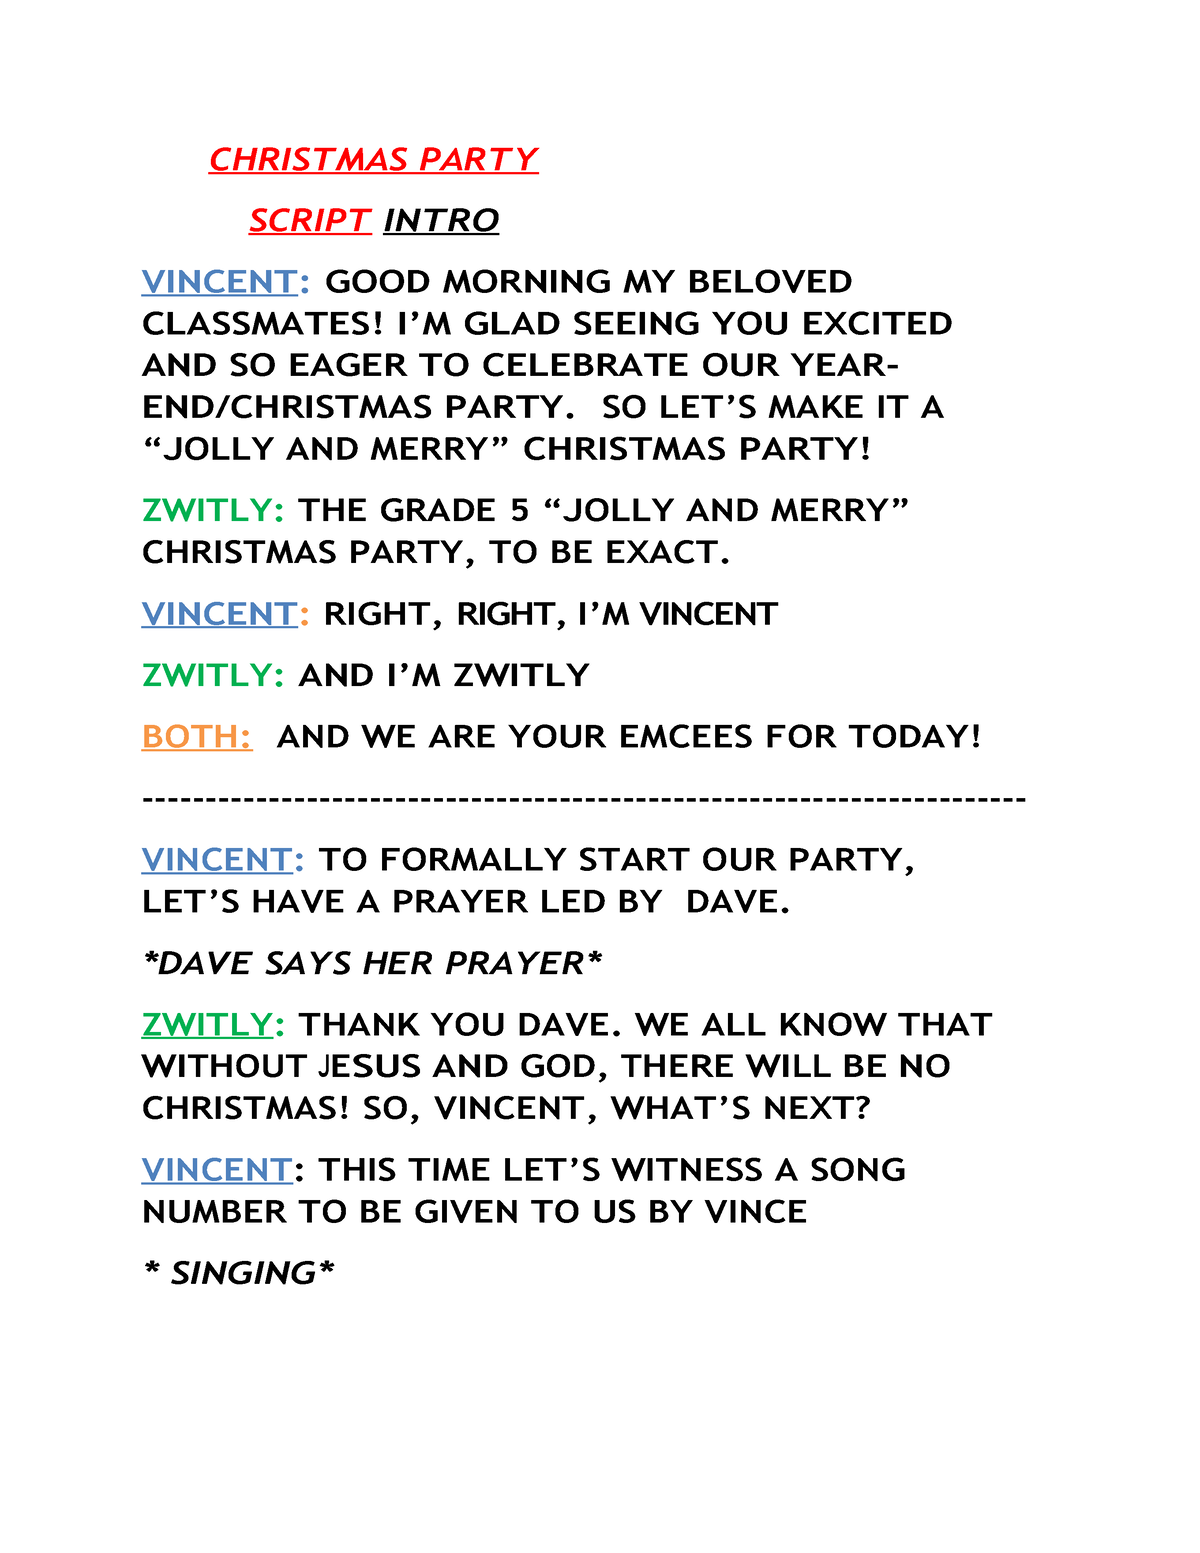 Emcee Christmas Party Script - CHRISTMAS PARTY SCRIPT INTRO VINCENT ...